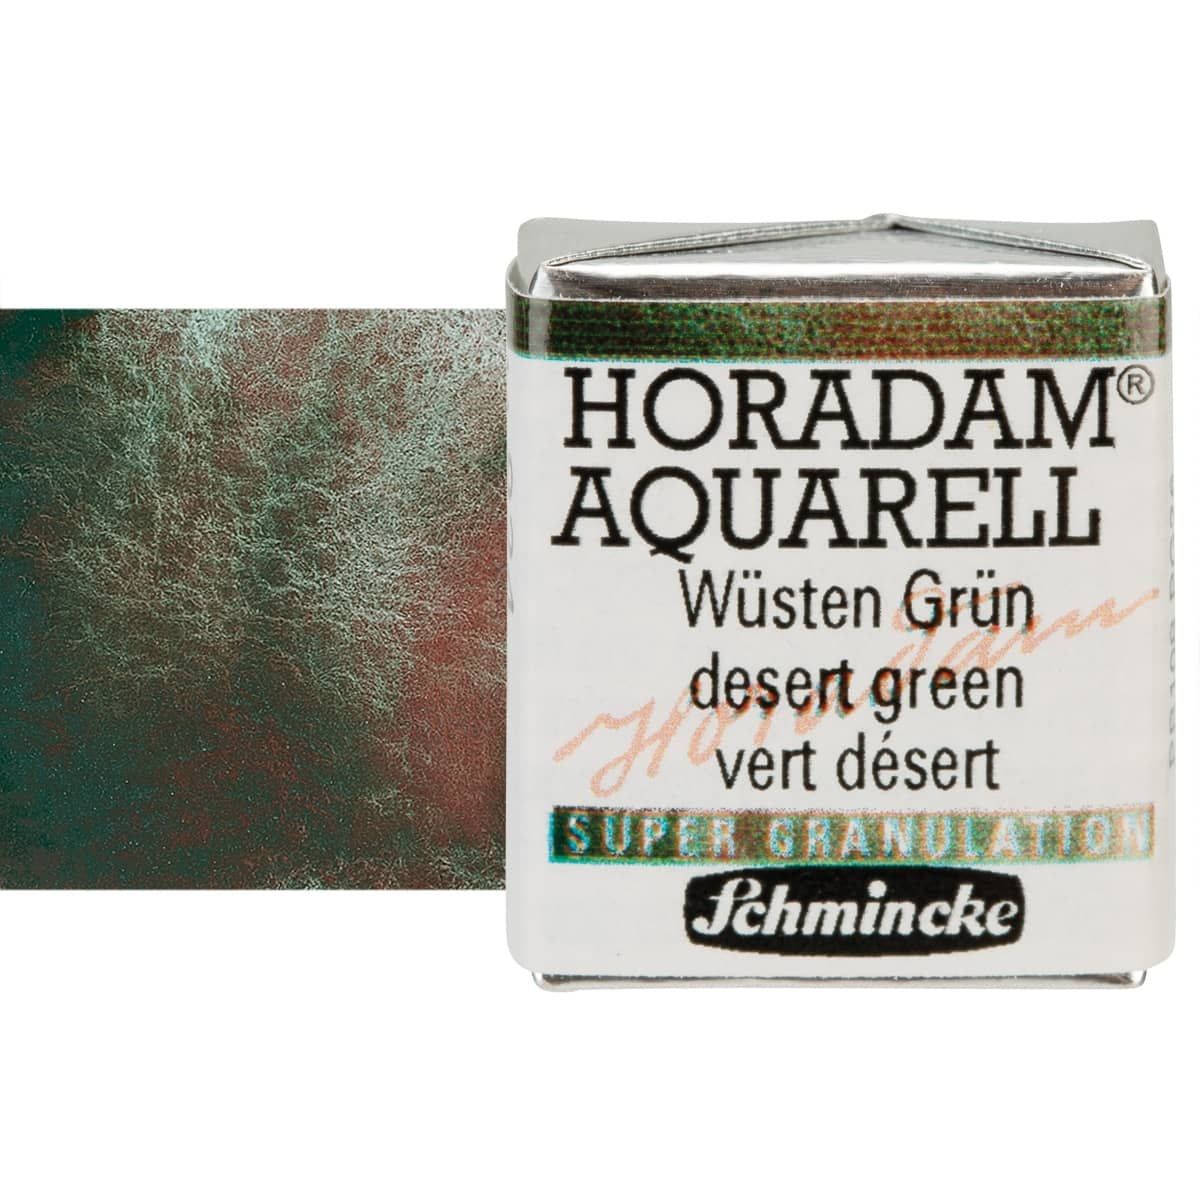 DESERT Schmincke Horadam Super Granulating Watercolor Paints